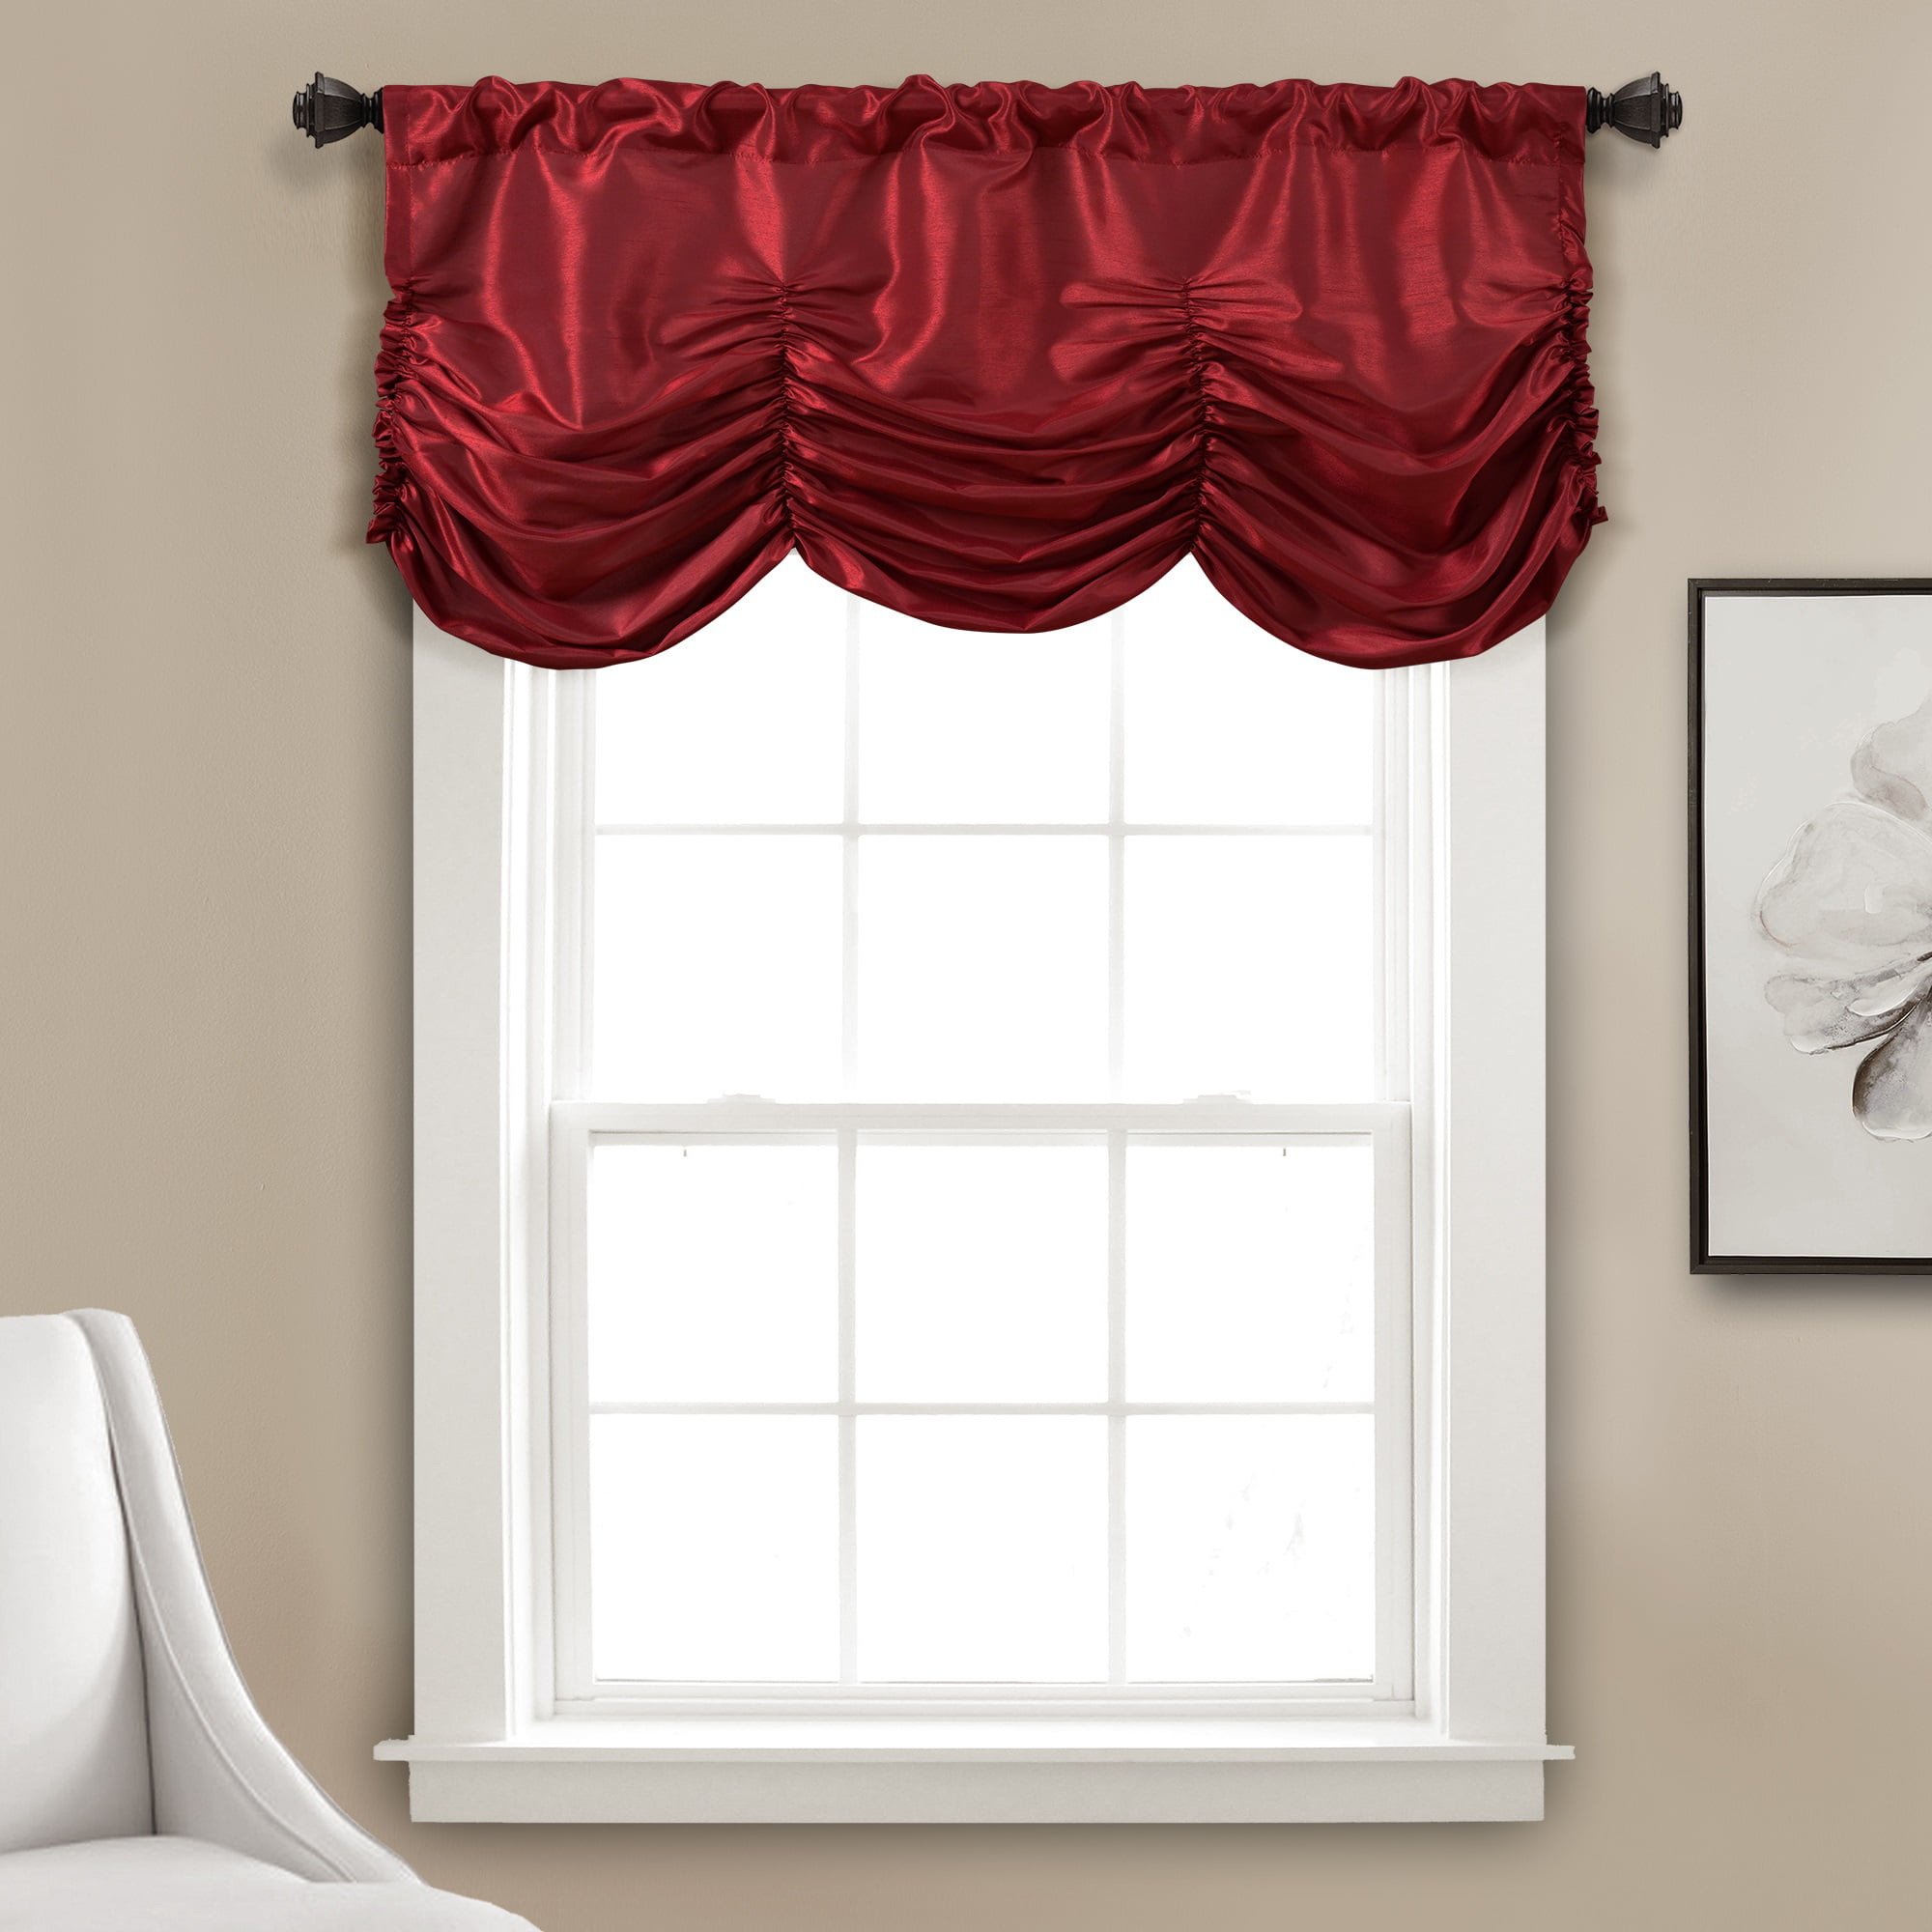 lovemyfabric Cotton White Polka Dots/Spots Design Kitchen Curtain Valance-Red 